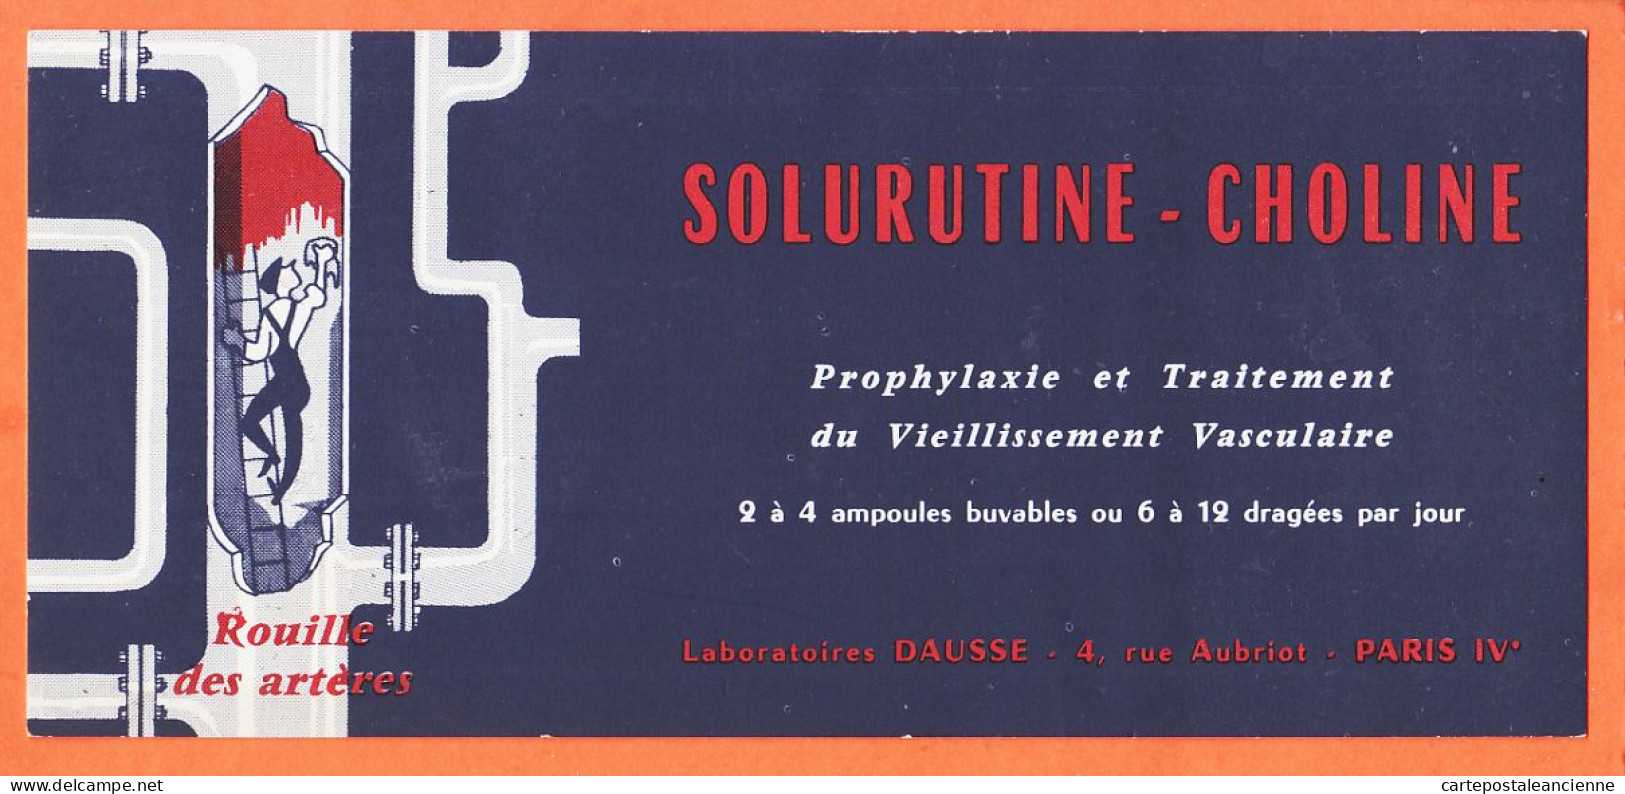 06143 / PARIS IV Laboratoire DAUSSE 4 Rue AUBRIOT Prophylaxie Traitement Vieillissement SOLURUTINE-CHOLINE Buvard - Chemist's